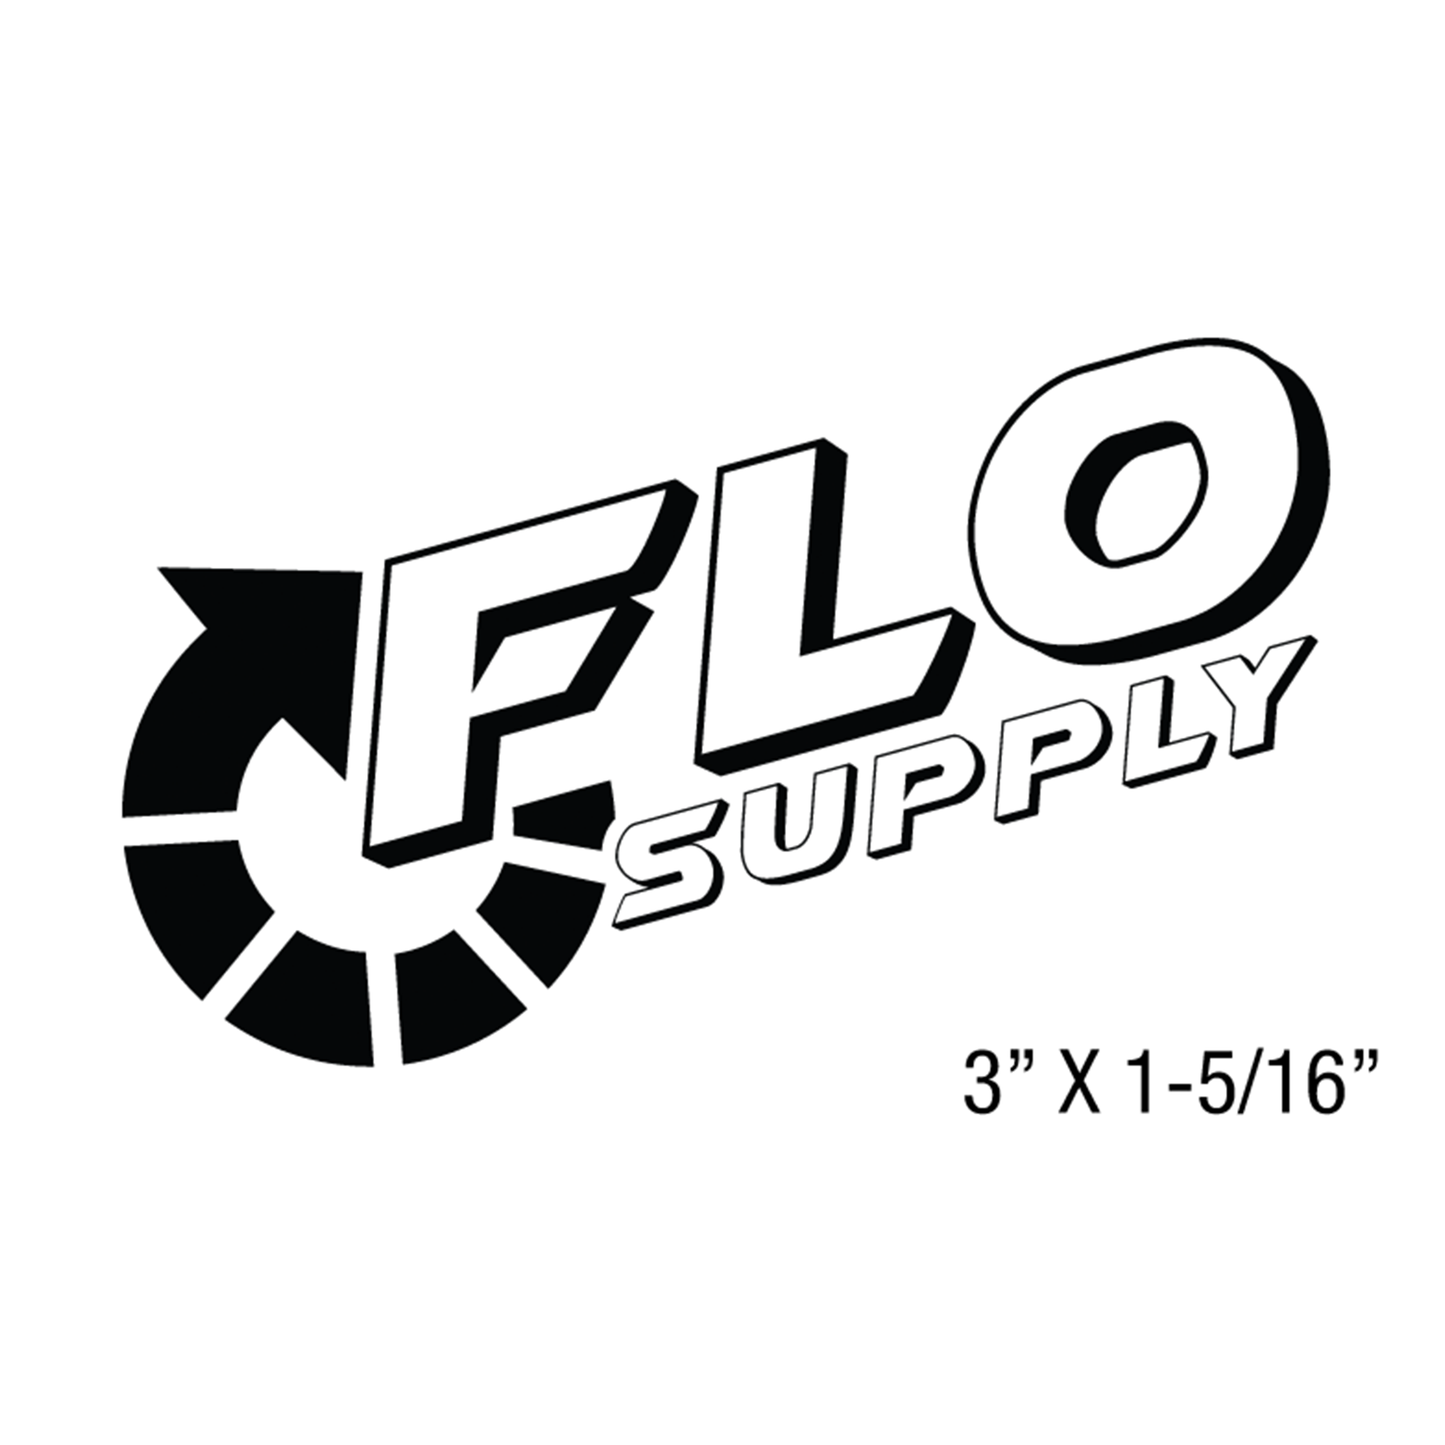 Flo Supply Decal - Die Cut (3" x 1-5/16")